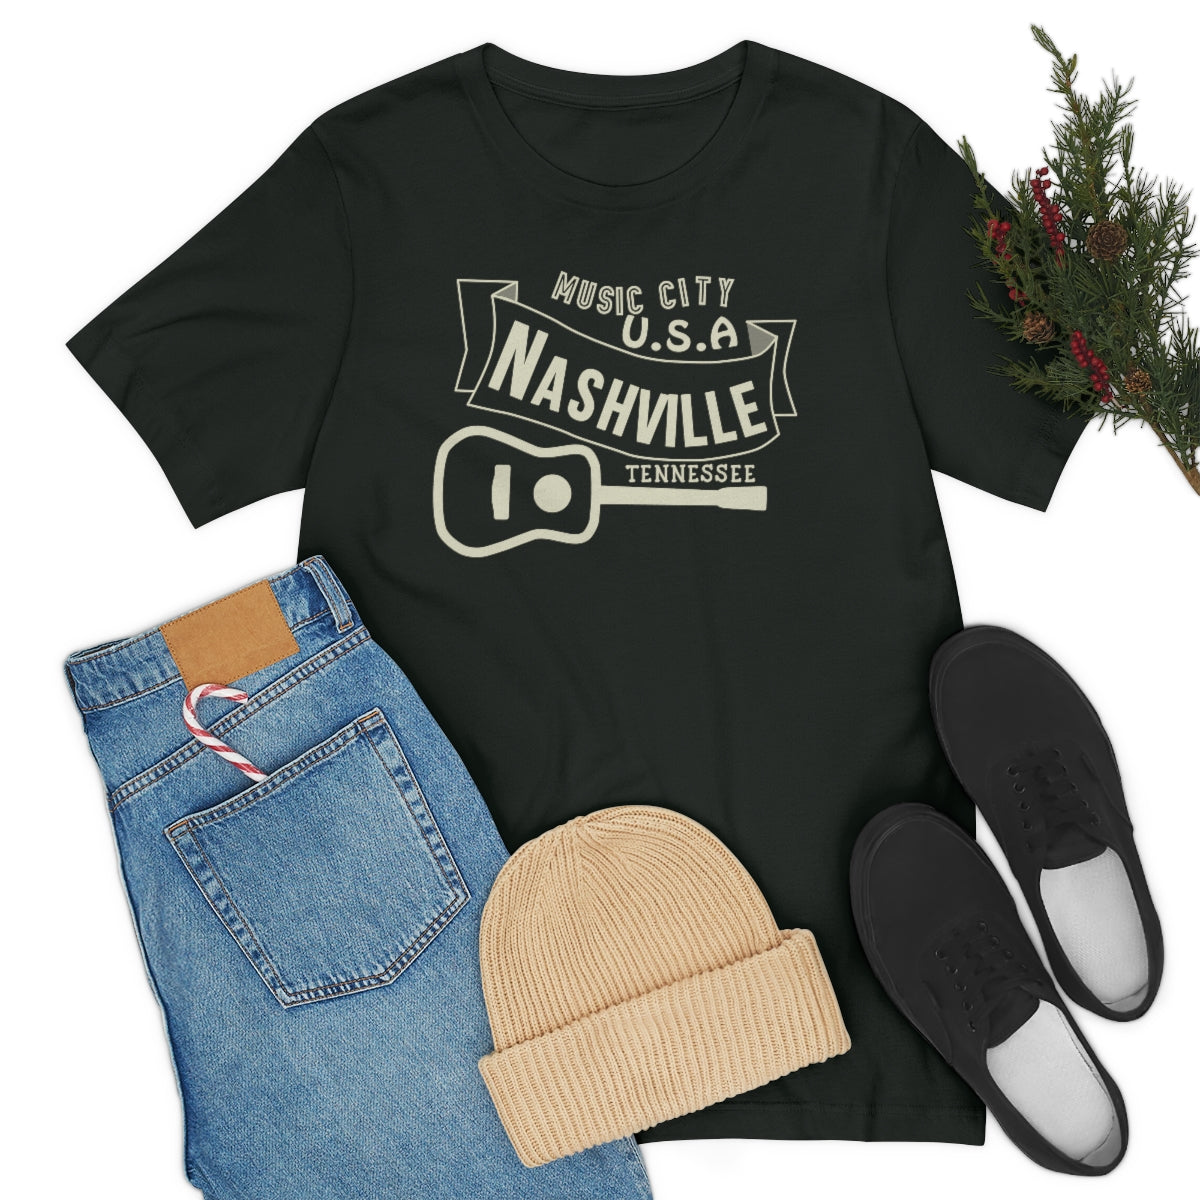 Nashville TN Banner Tshirt